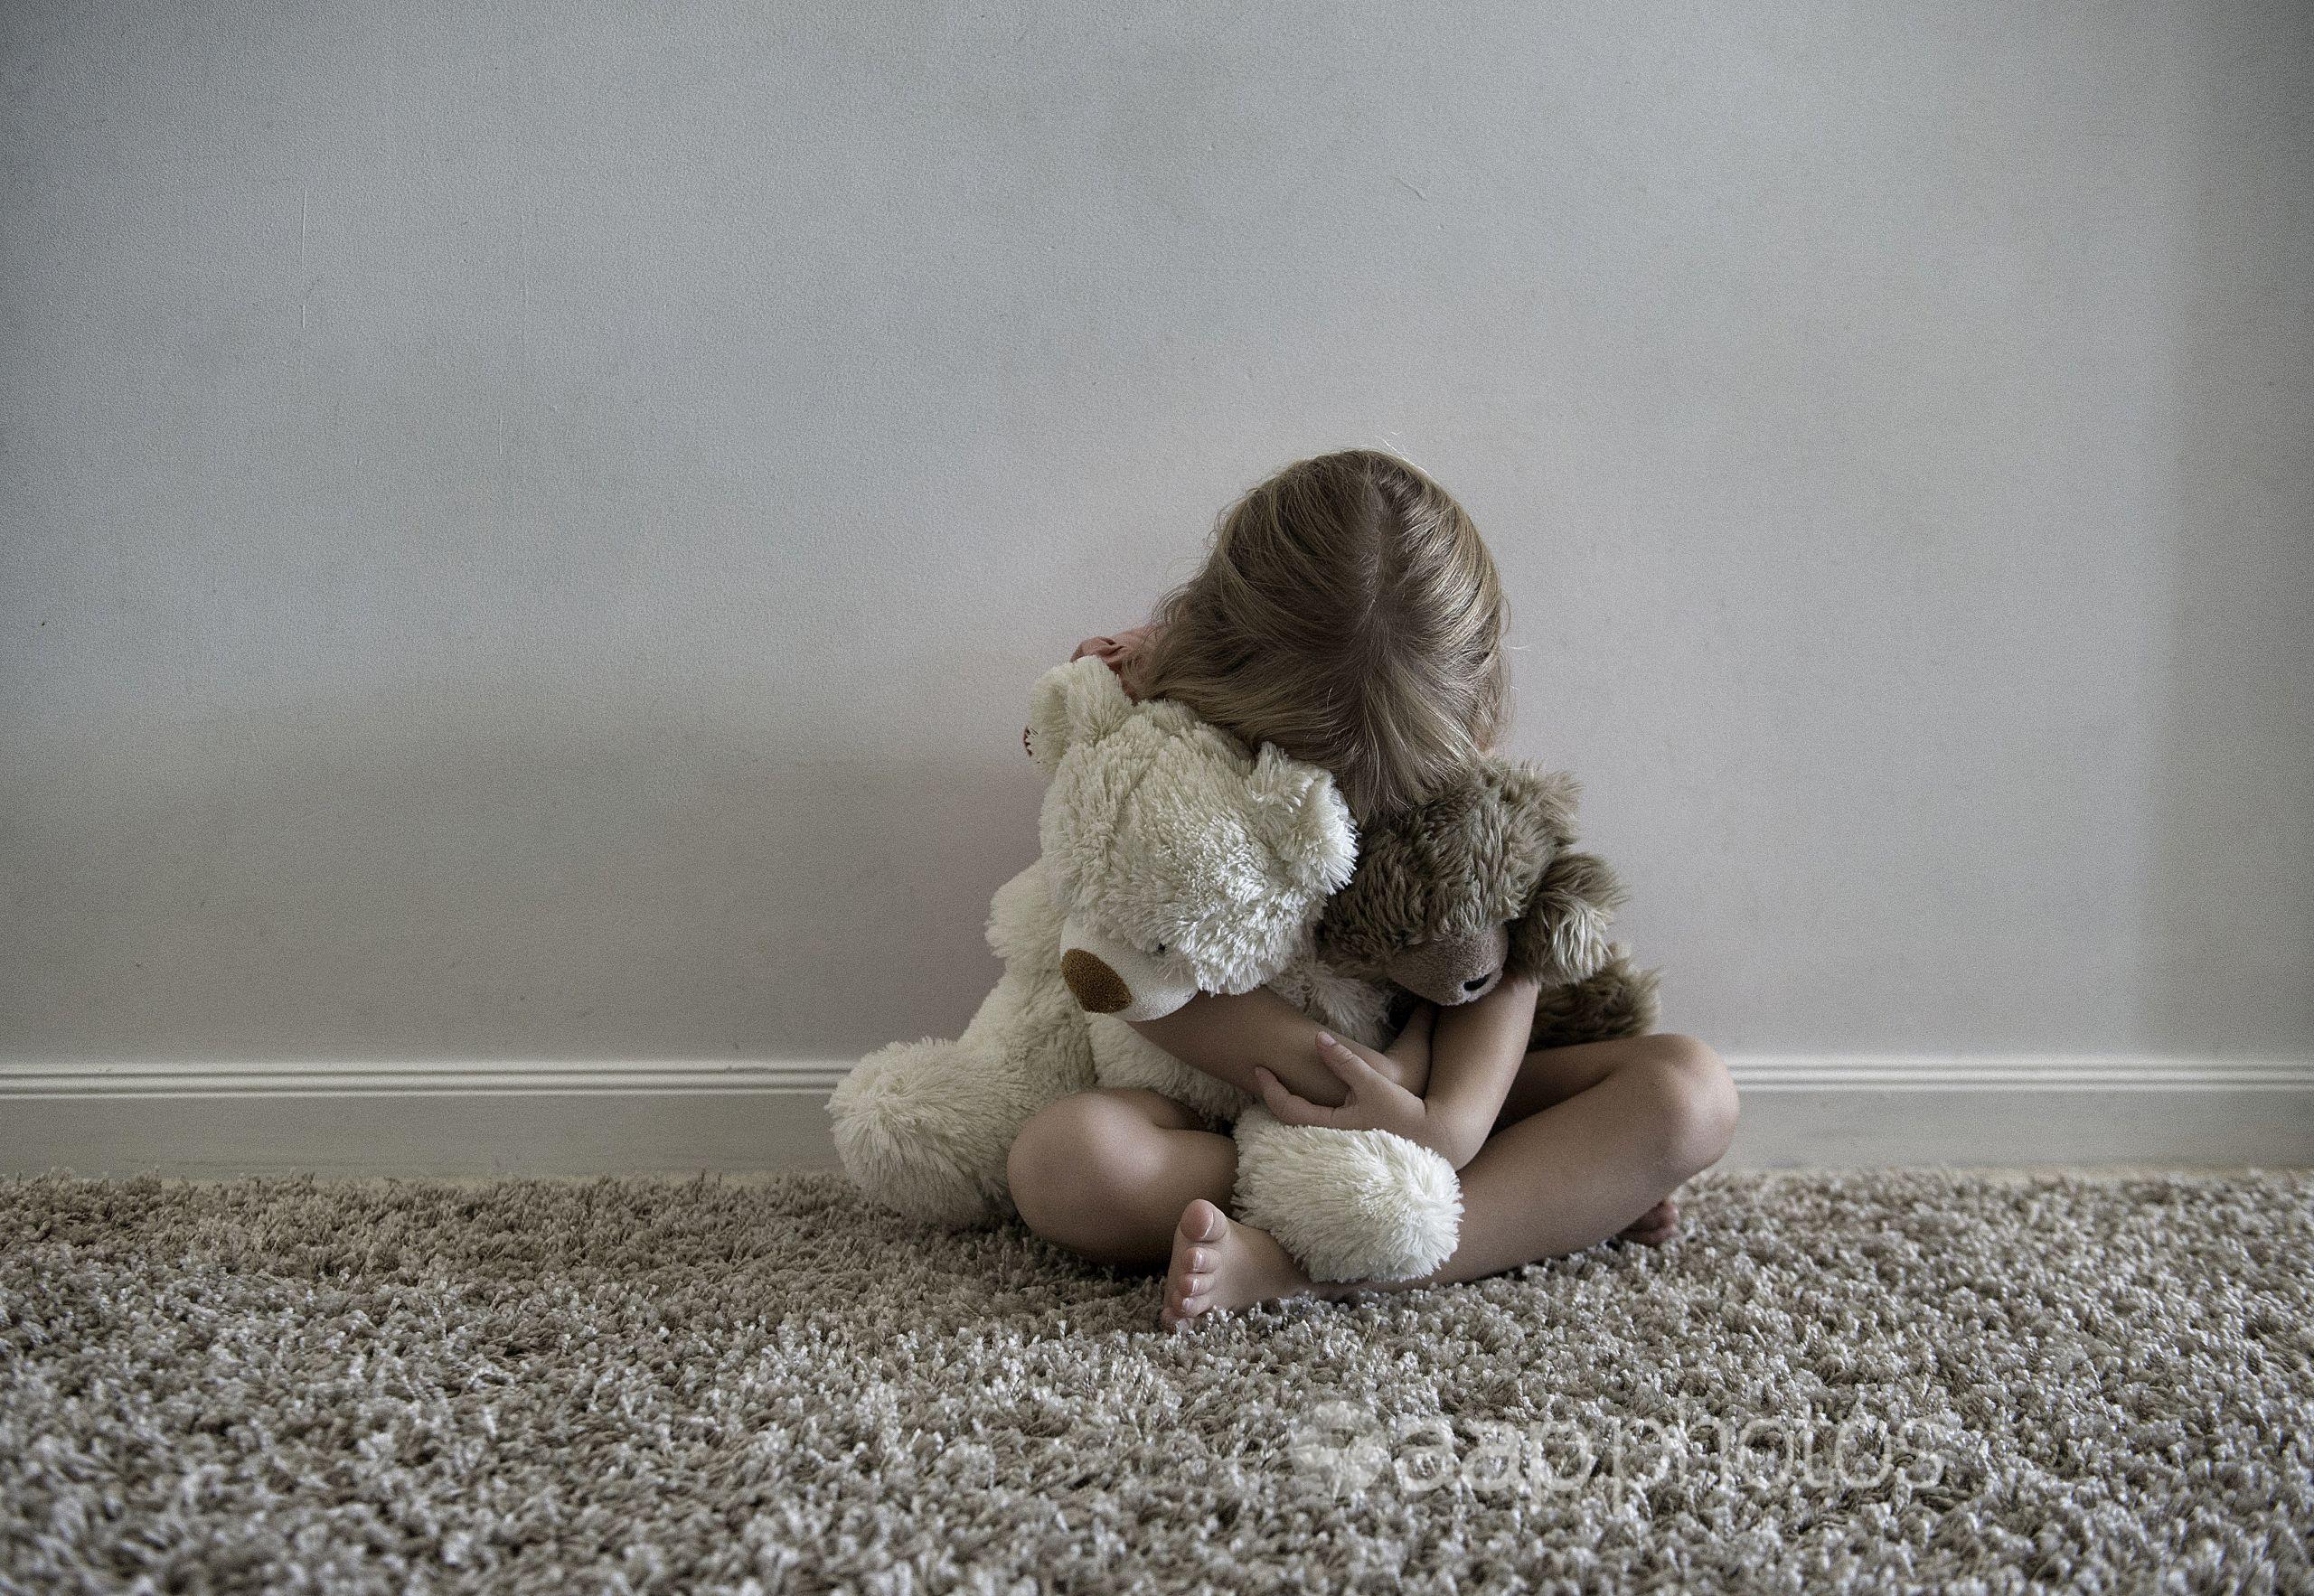 A little girl hugging toys.